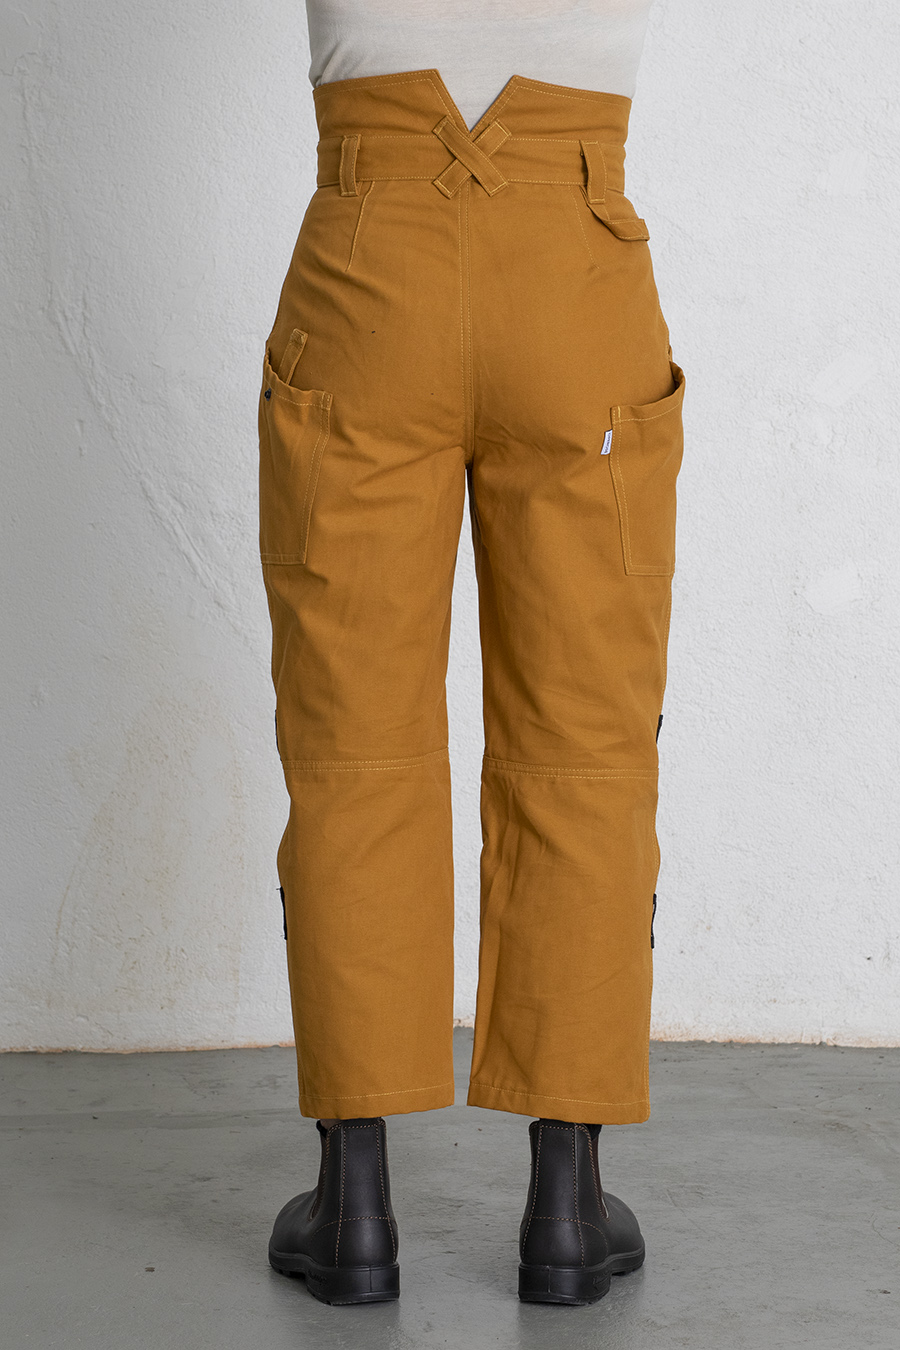 FELICIA work trouser mustard yellow